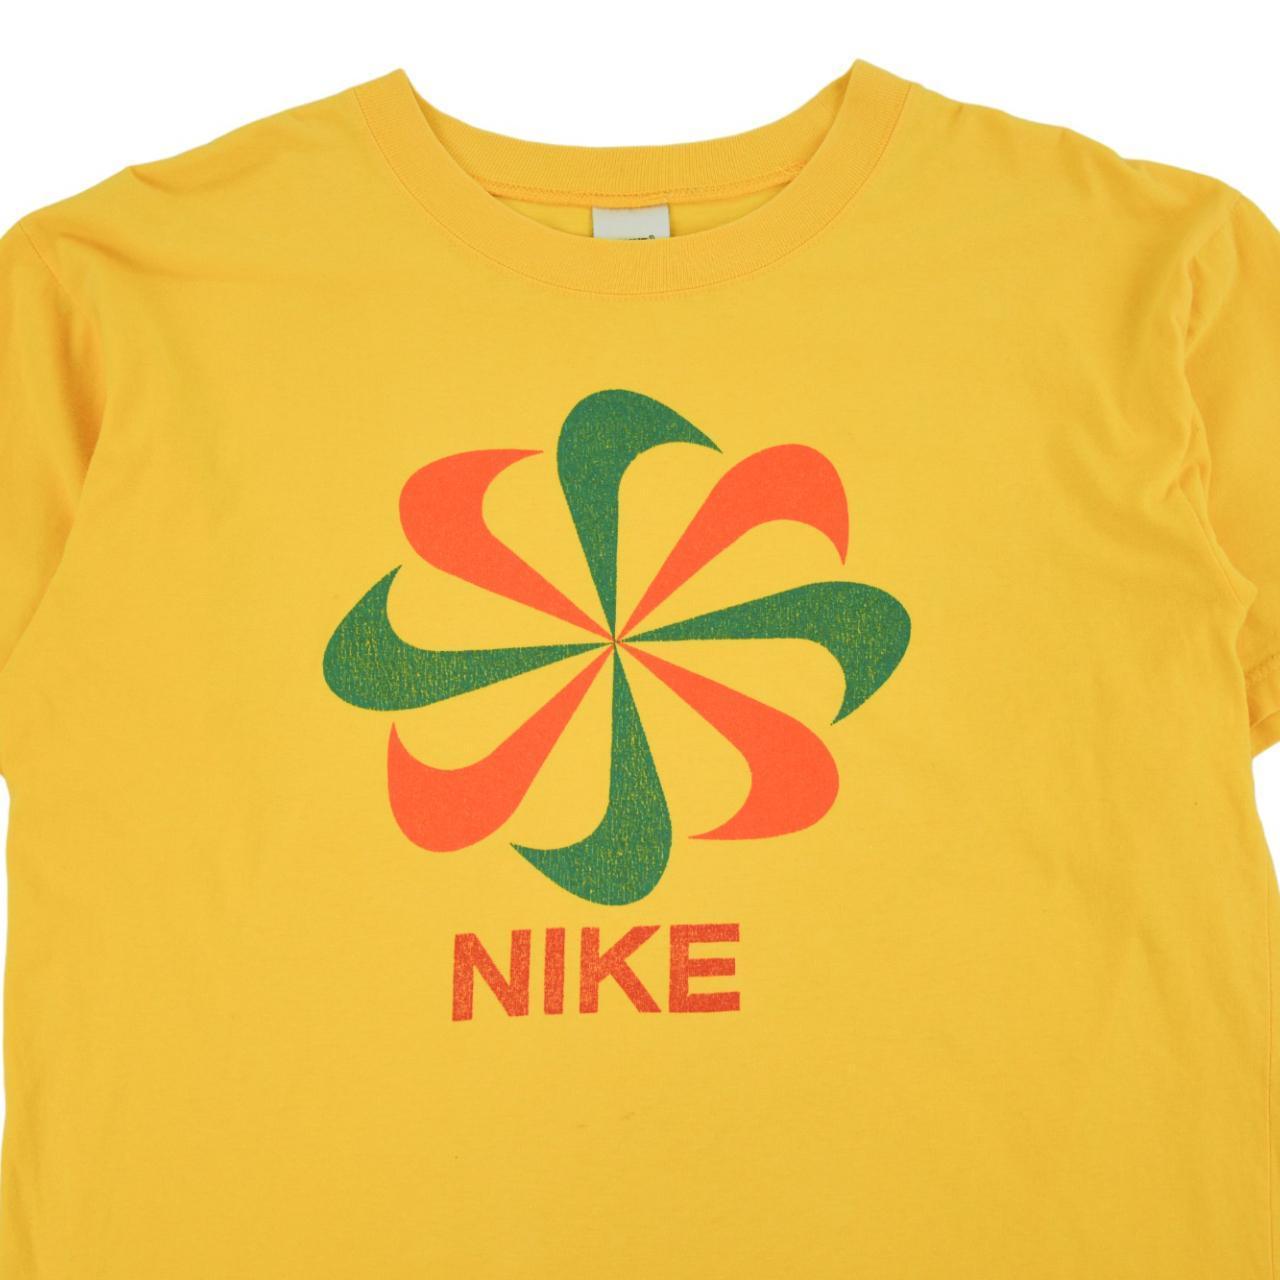 Vintage Nike Pin Wheel T Shirt Size S - Known Source